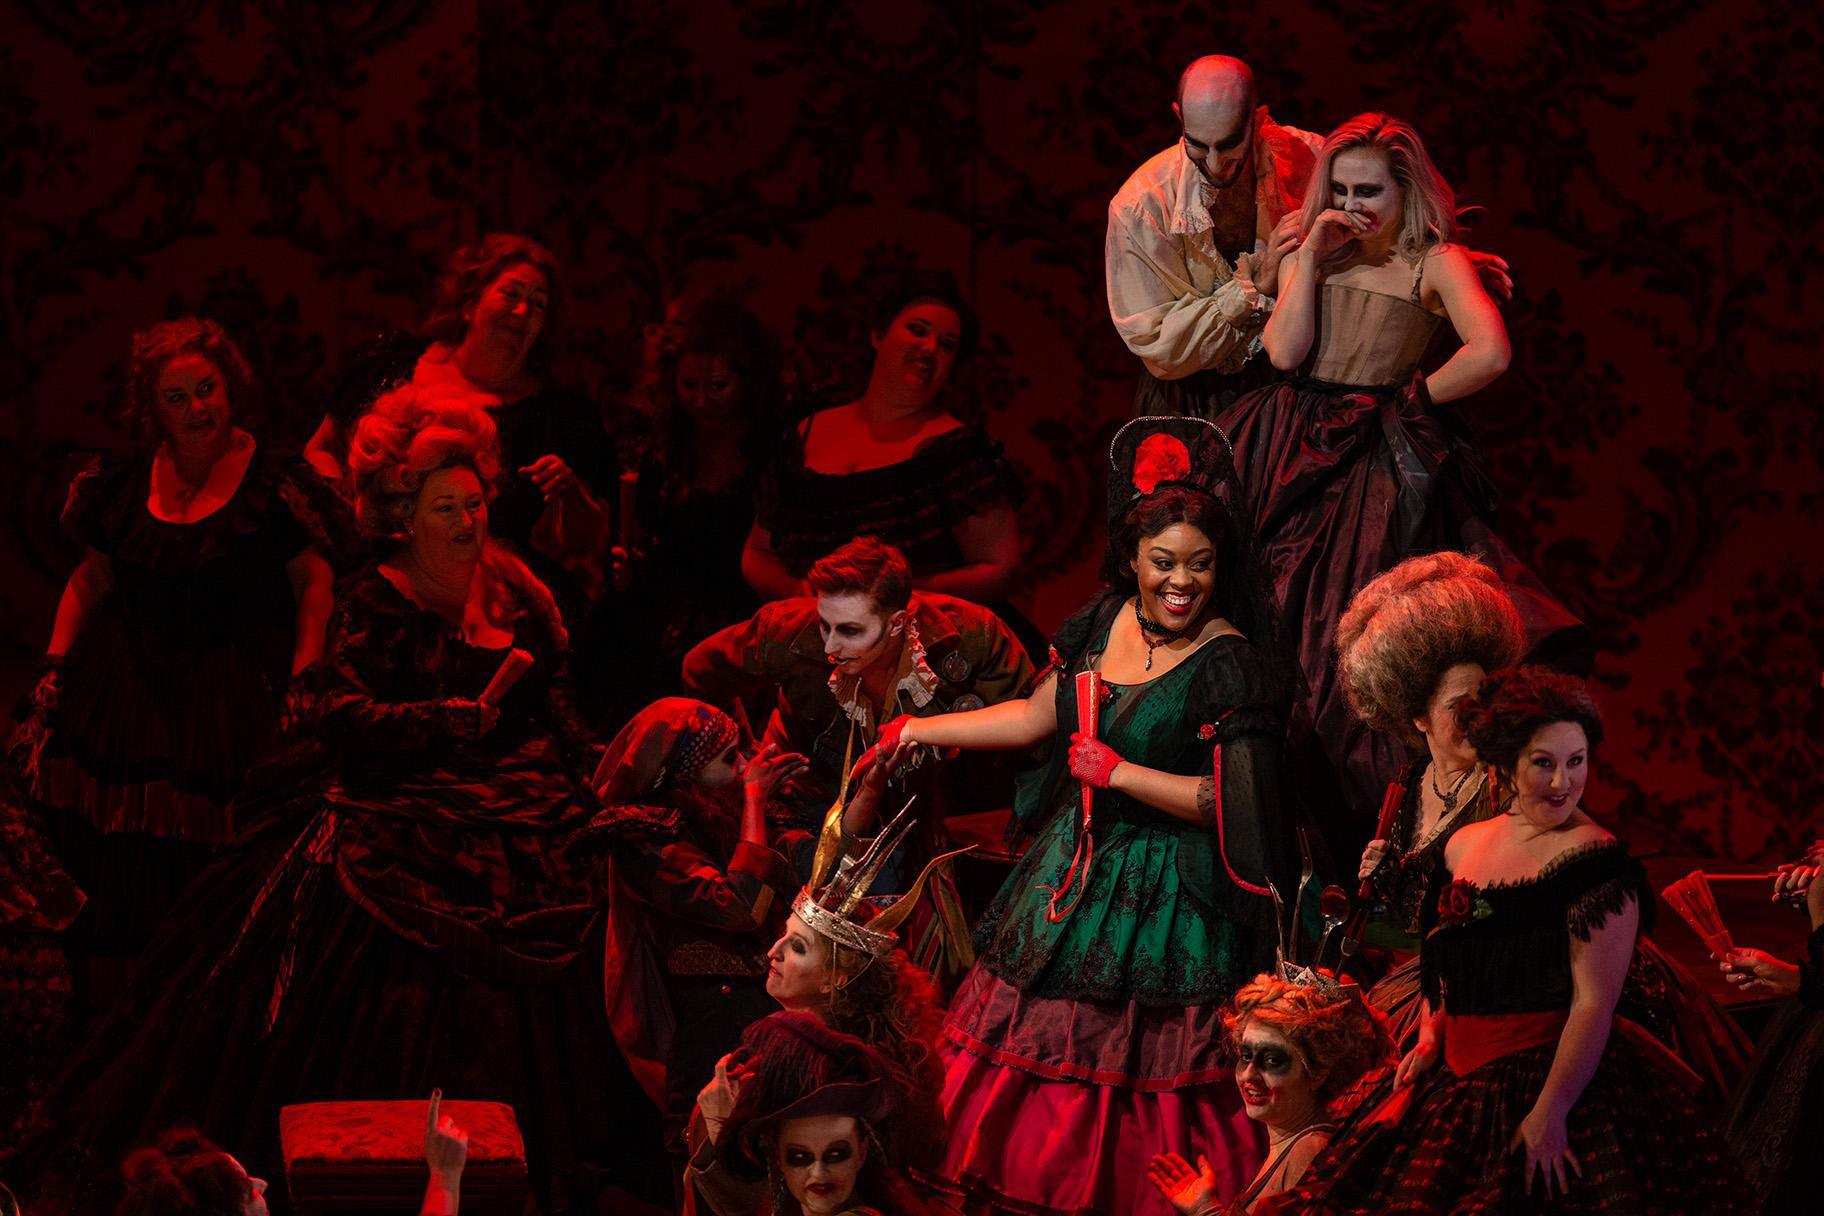 Zoie Reams in “La Traviata” (Credit: Lyric Opera of Chicago)